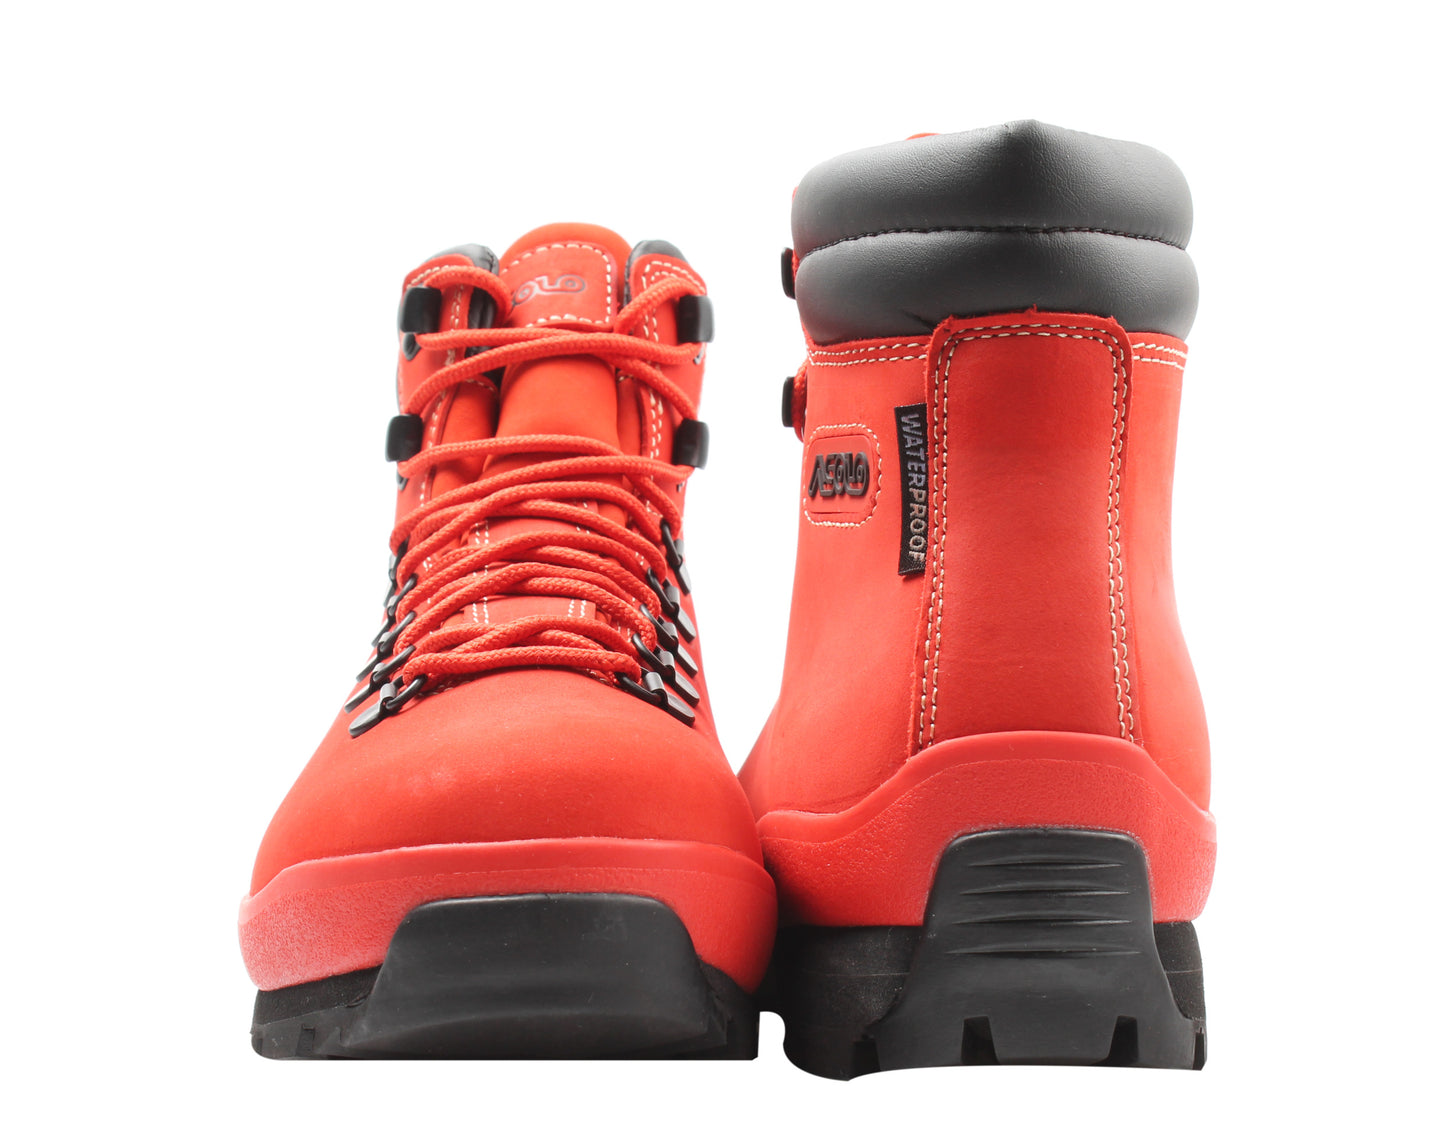 Asolo Supremacy Waterproof Red/Black Nubuck Men's Boots AS-201M